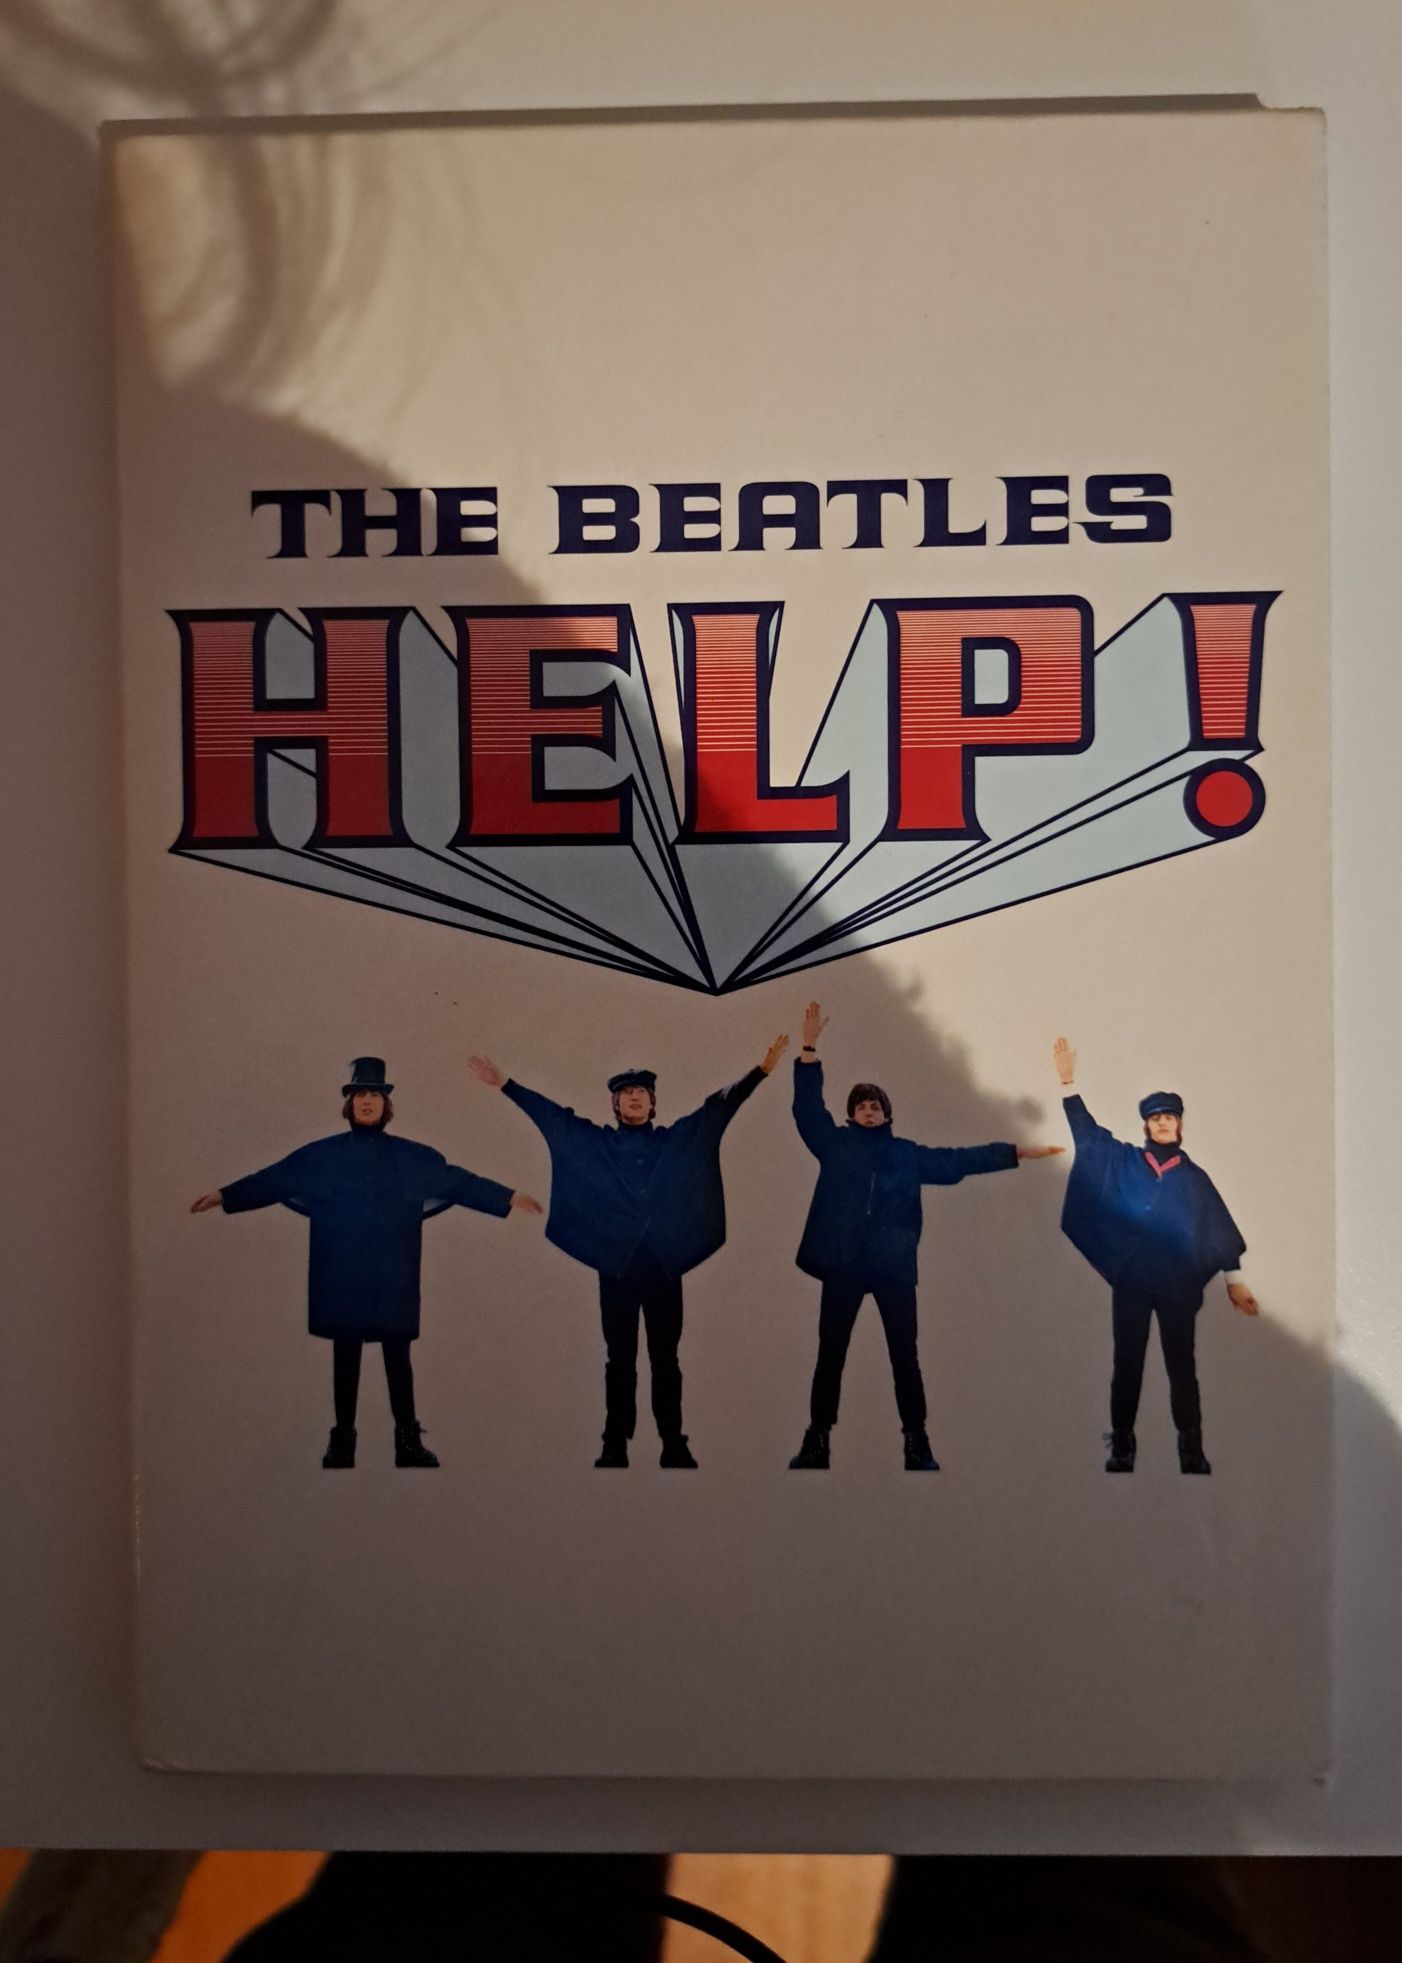 DVD - "Help!" dos Beatles